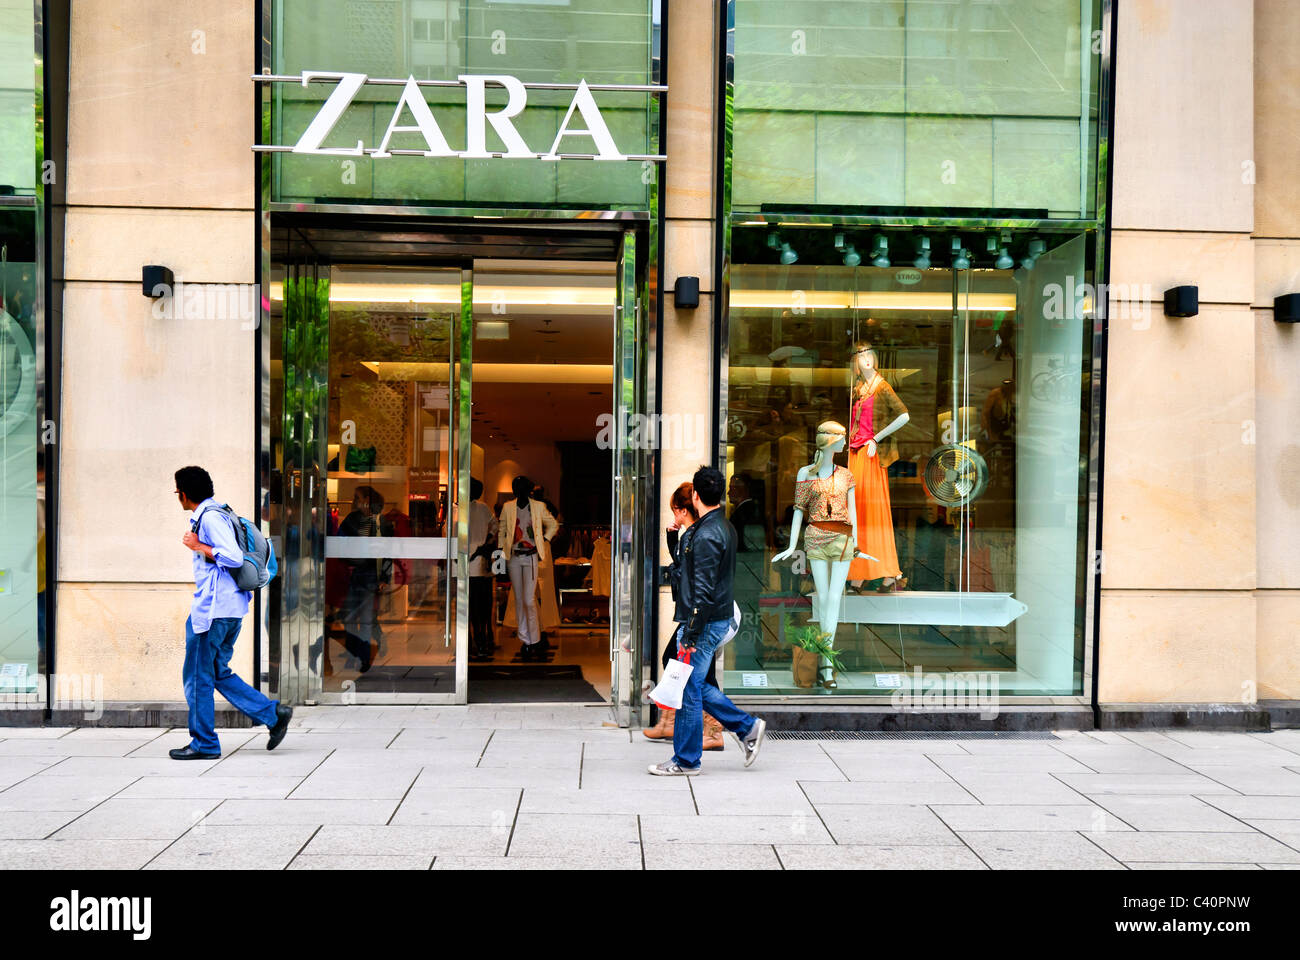 Zara store in Frankfurt town center, Germany Stock Photo - Alamy